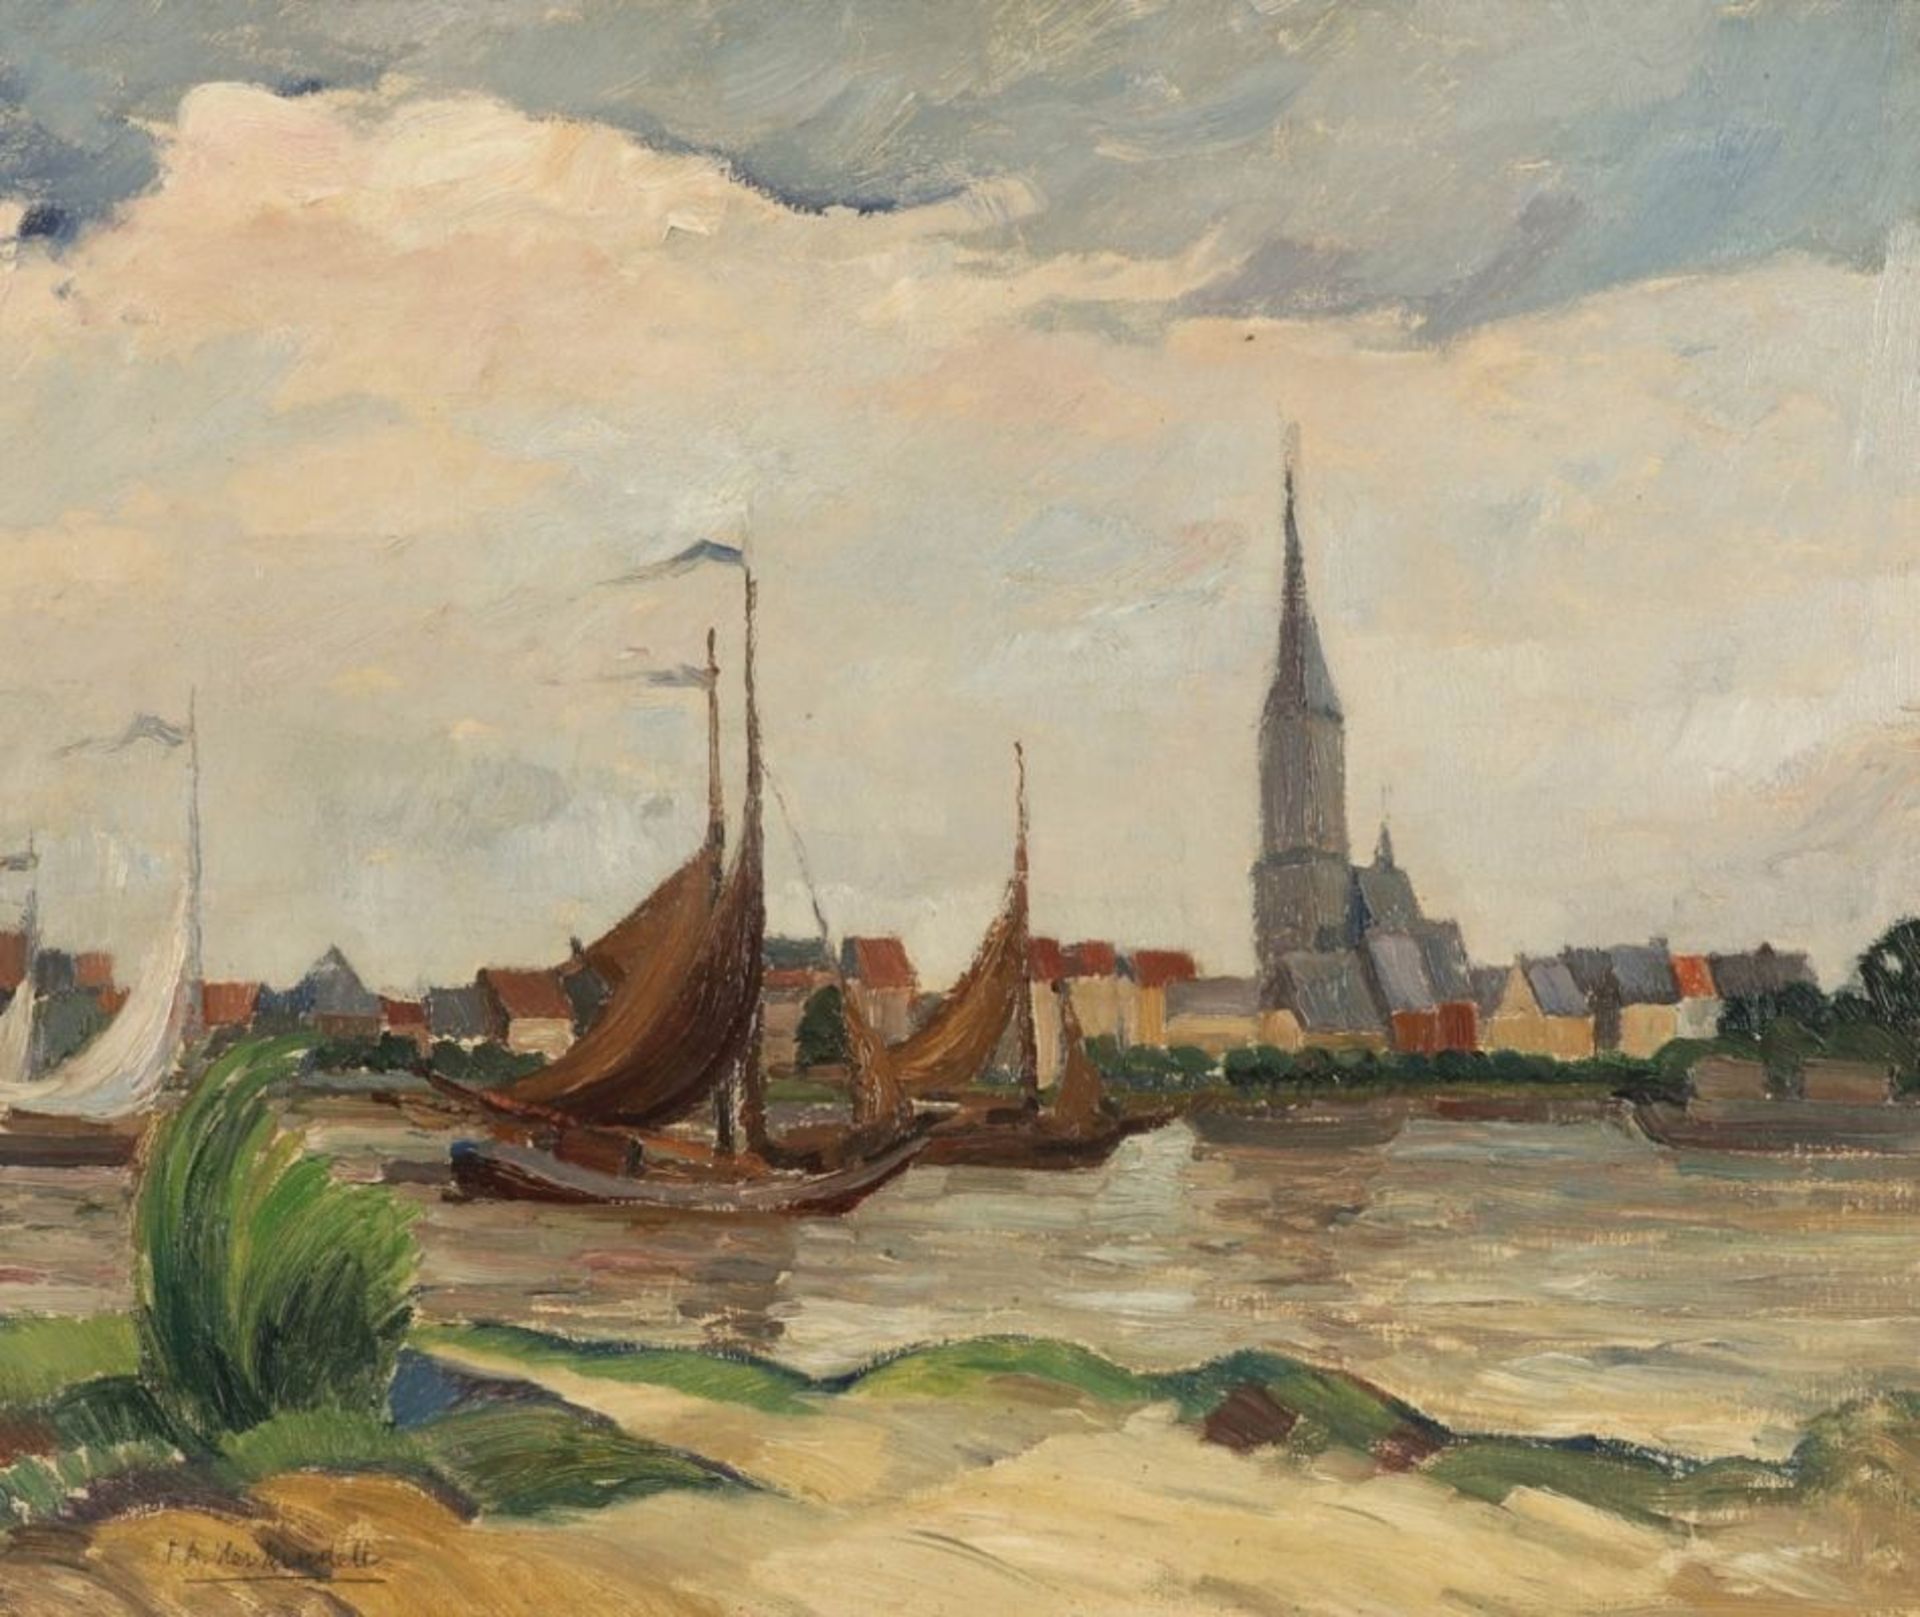 Friedrich August Herkendell1876 Düsseldorf - 1940 Düsseldorf - Segler am Fluss - Öl/Lwd. 50 x 60 cm.